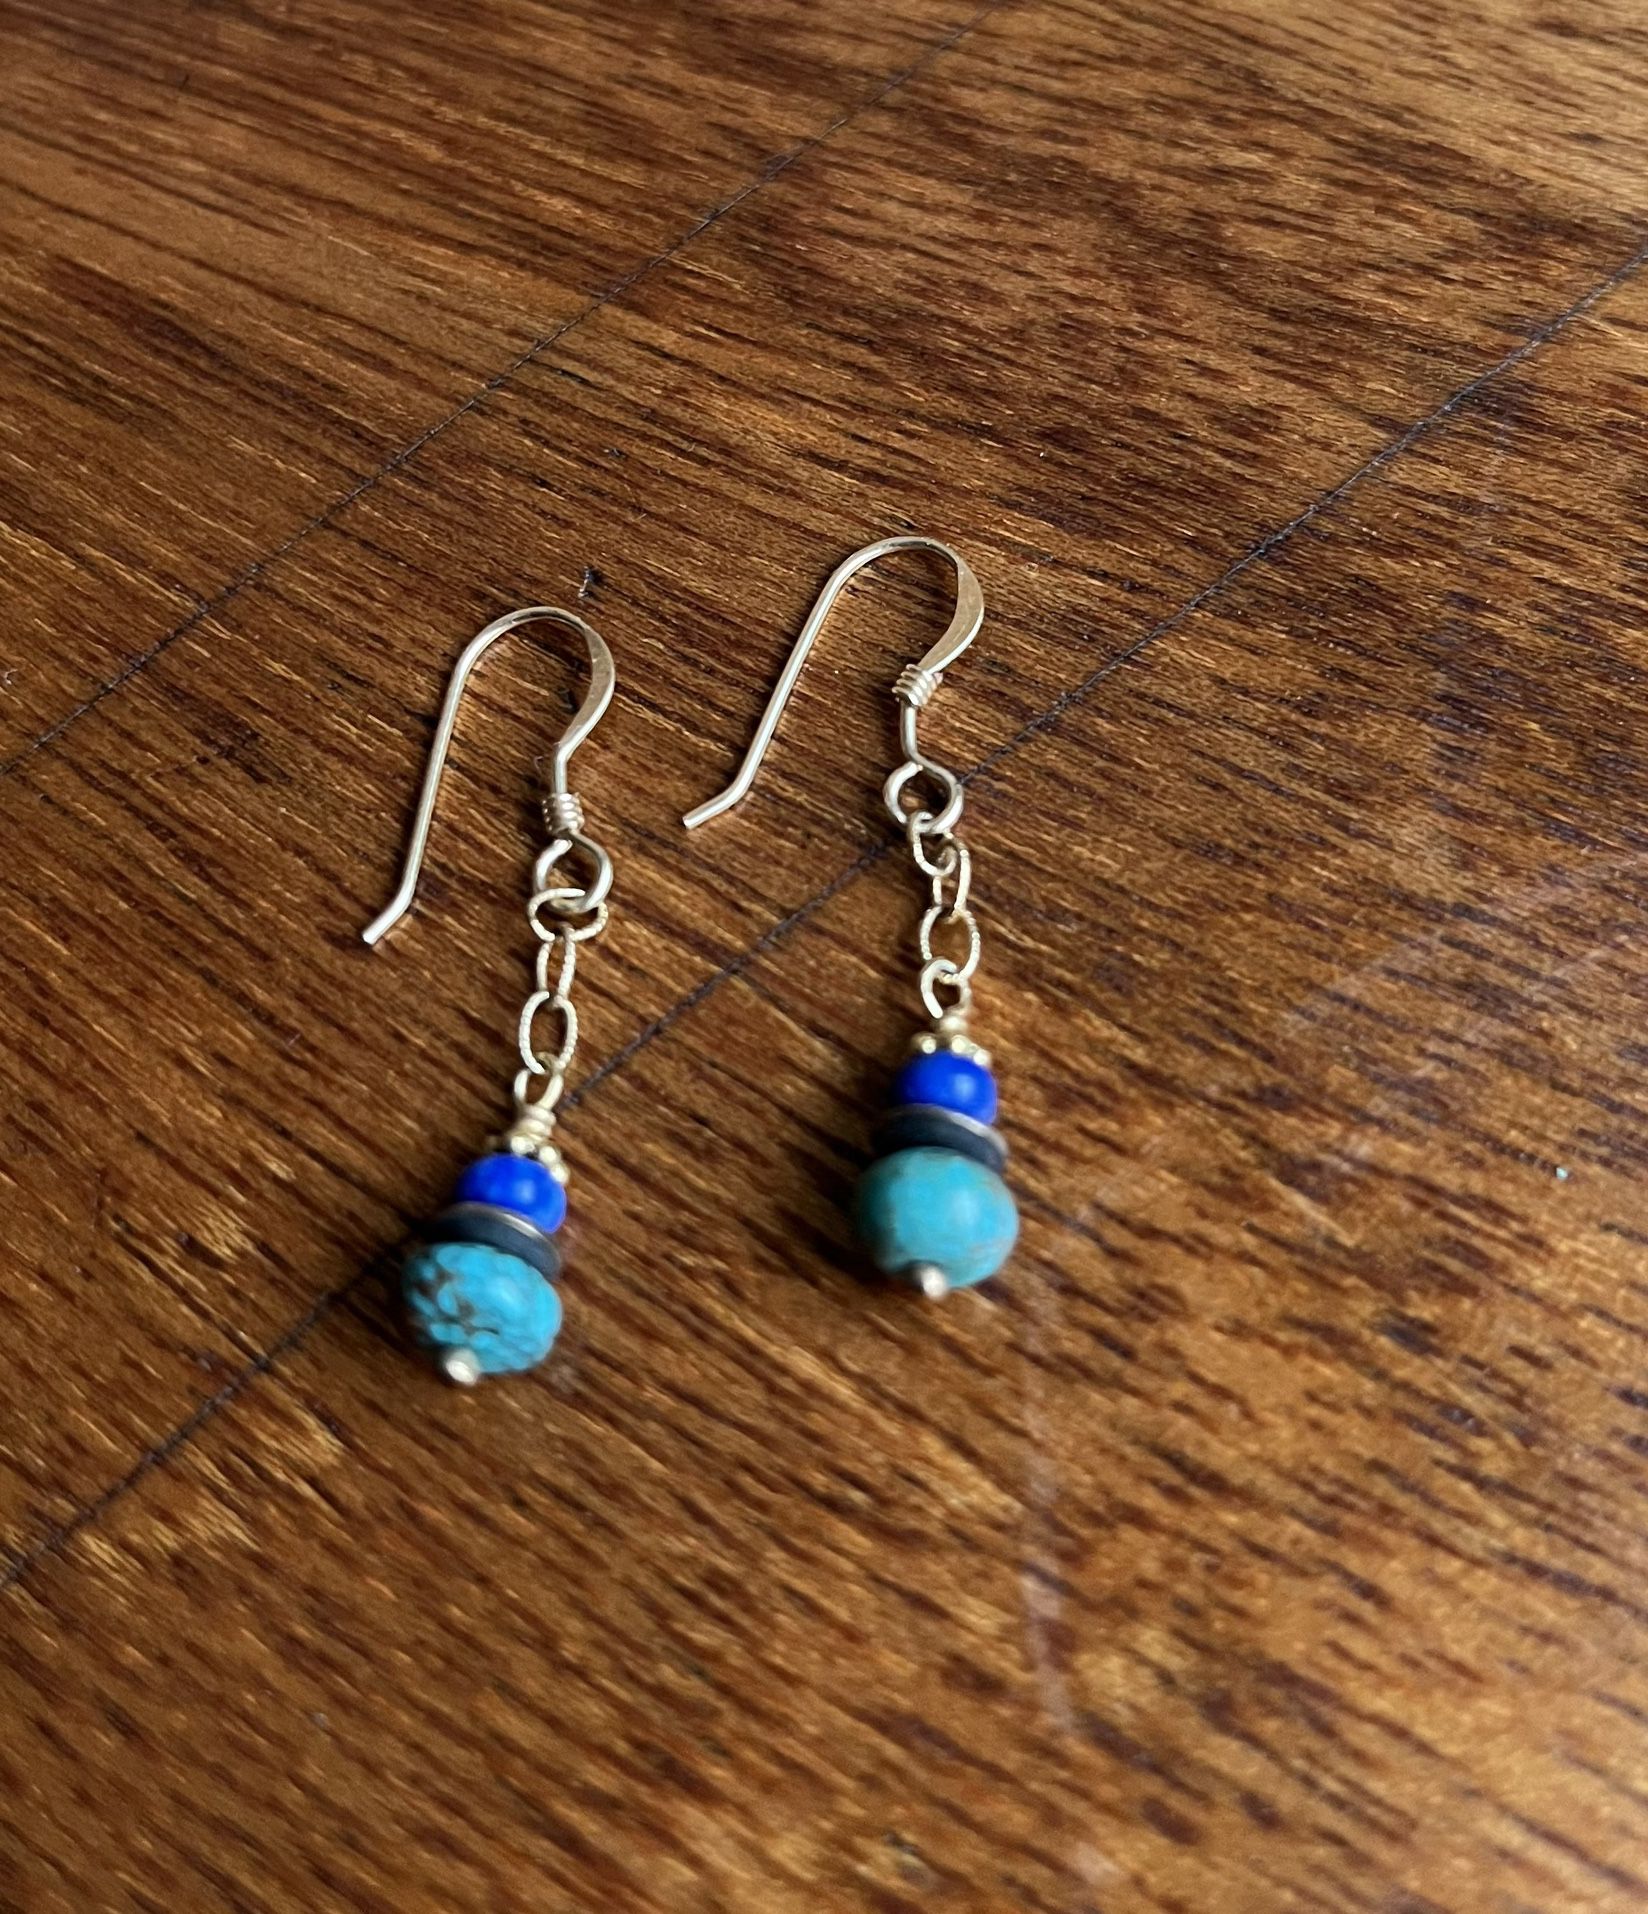 Turquoise And Lapis Dangler Earrings